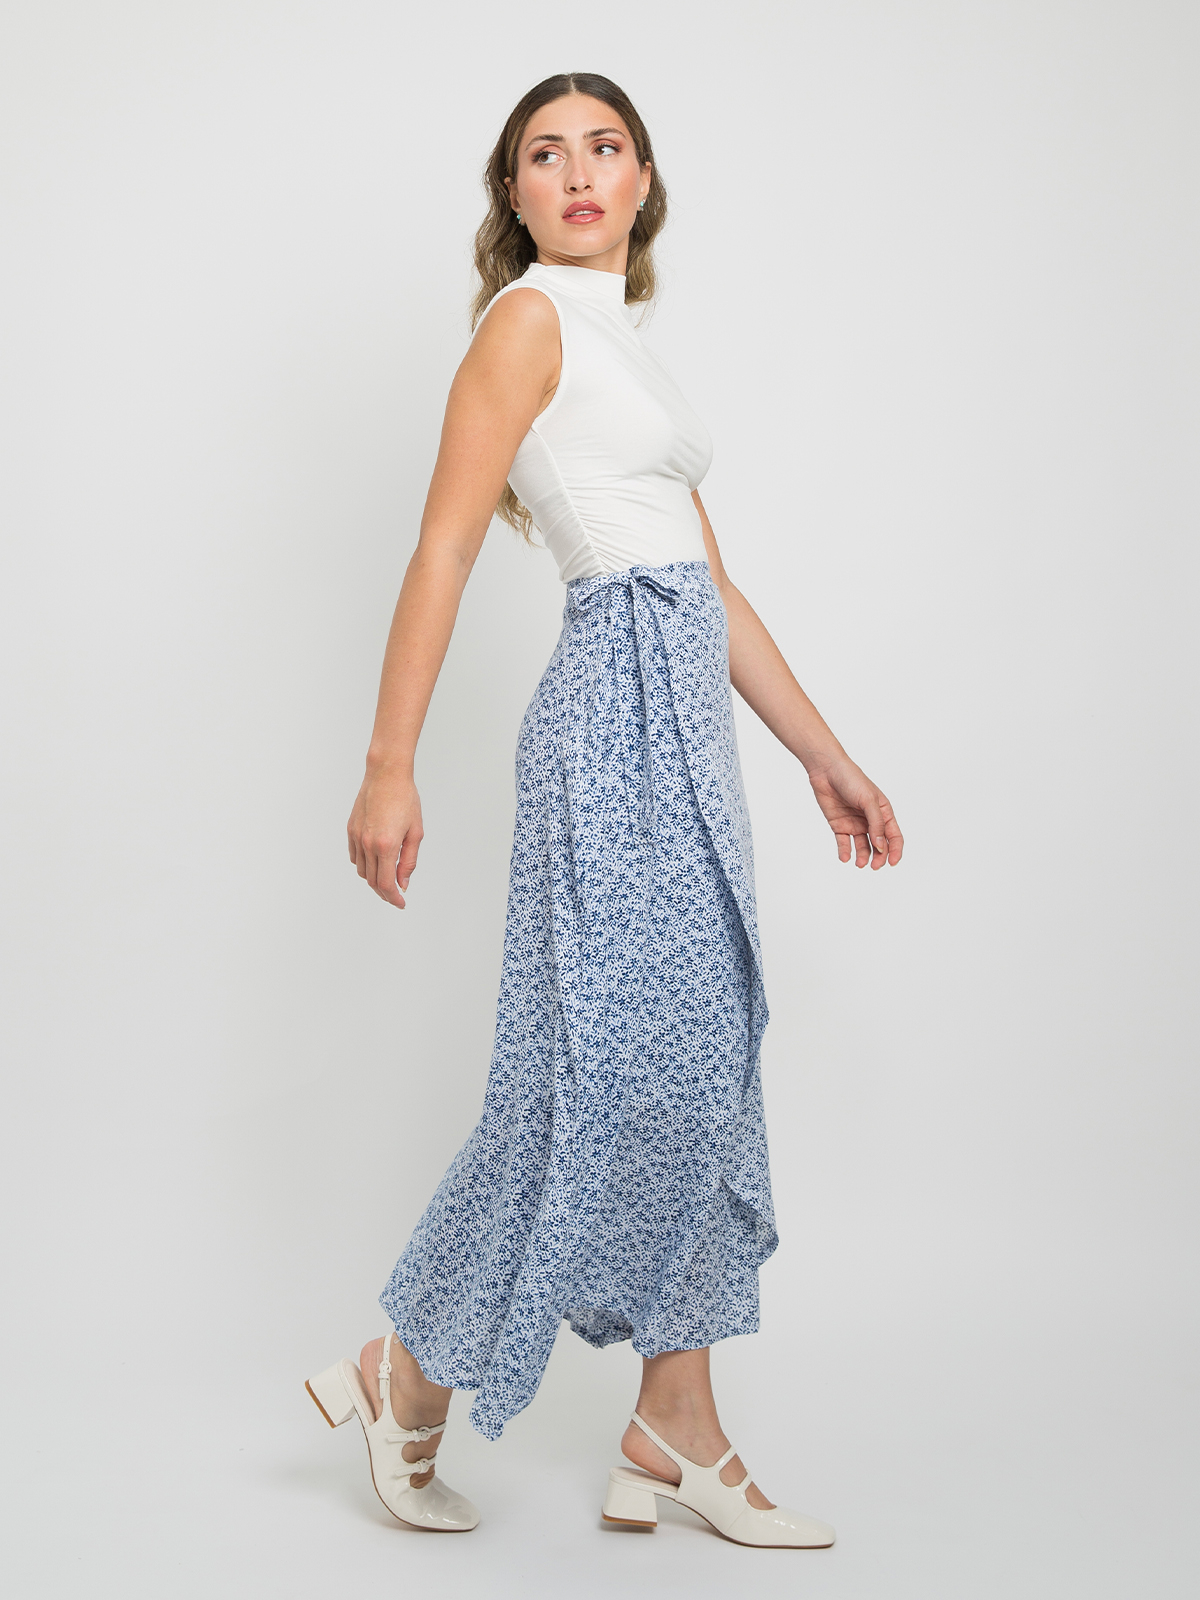 Venice - Warp Skirt in Printed Rayon Fabric